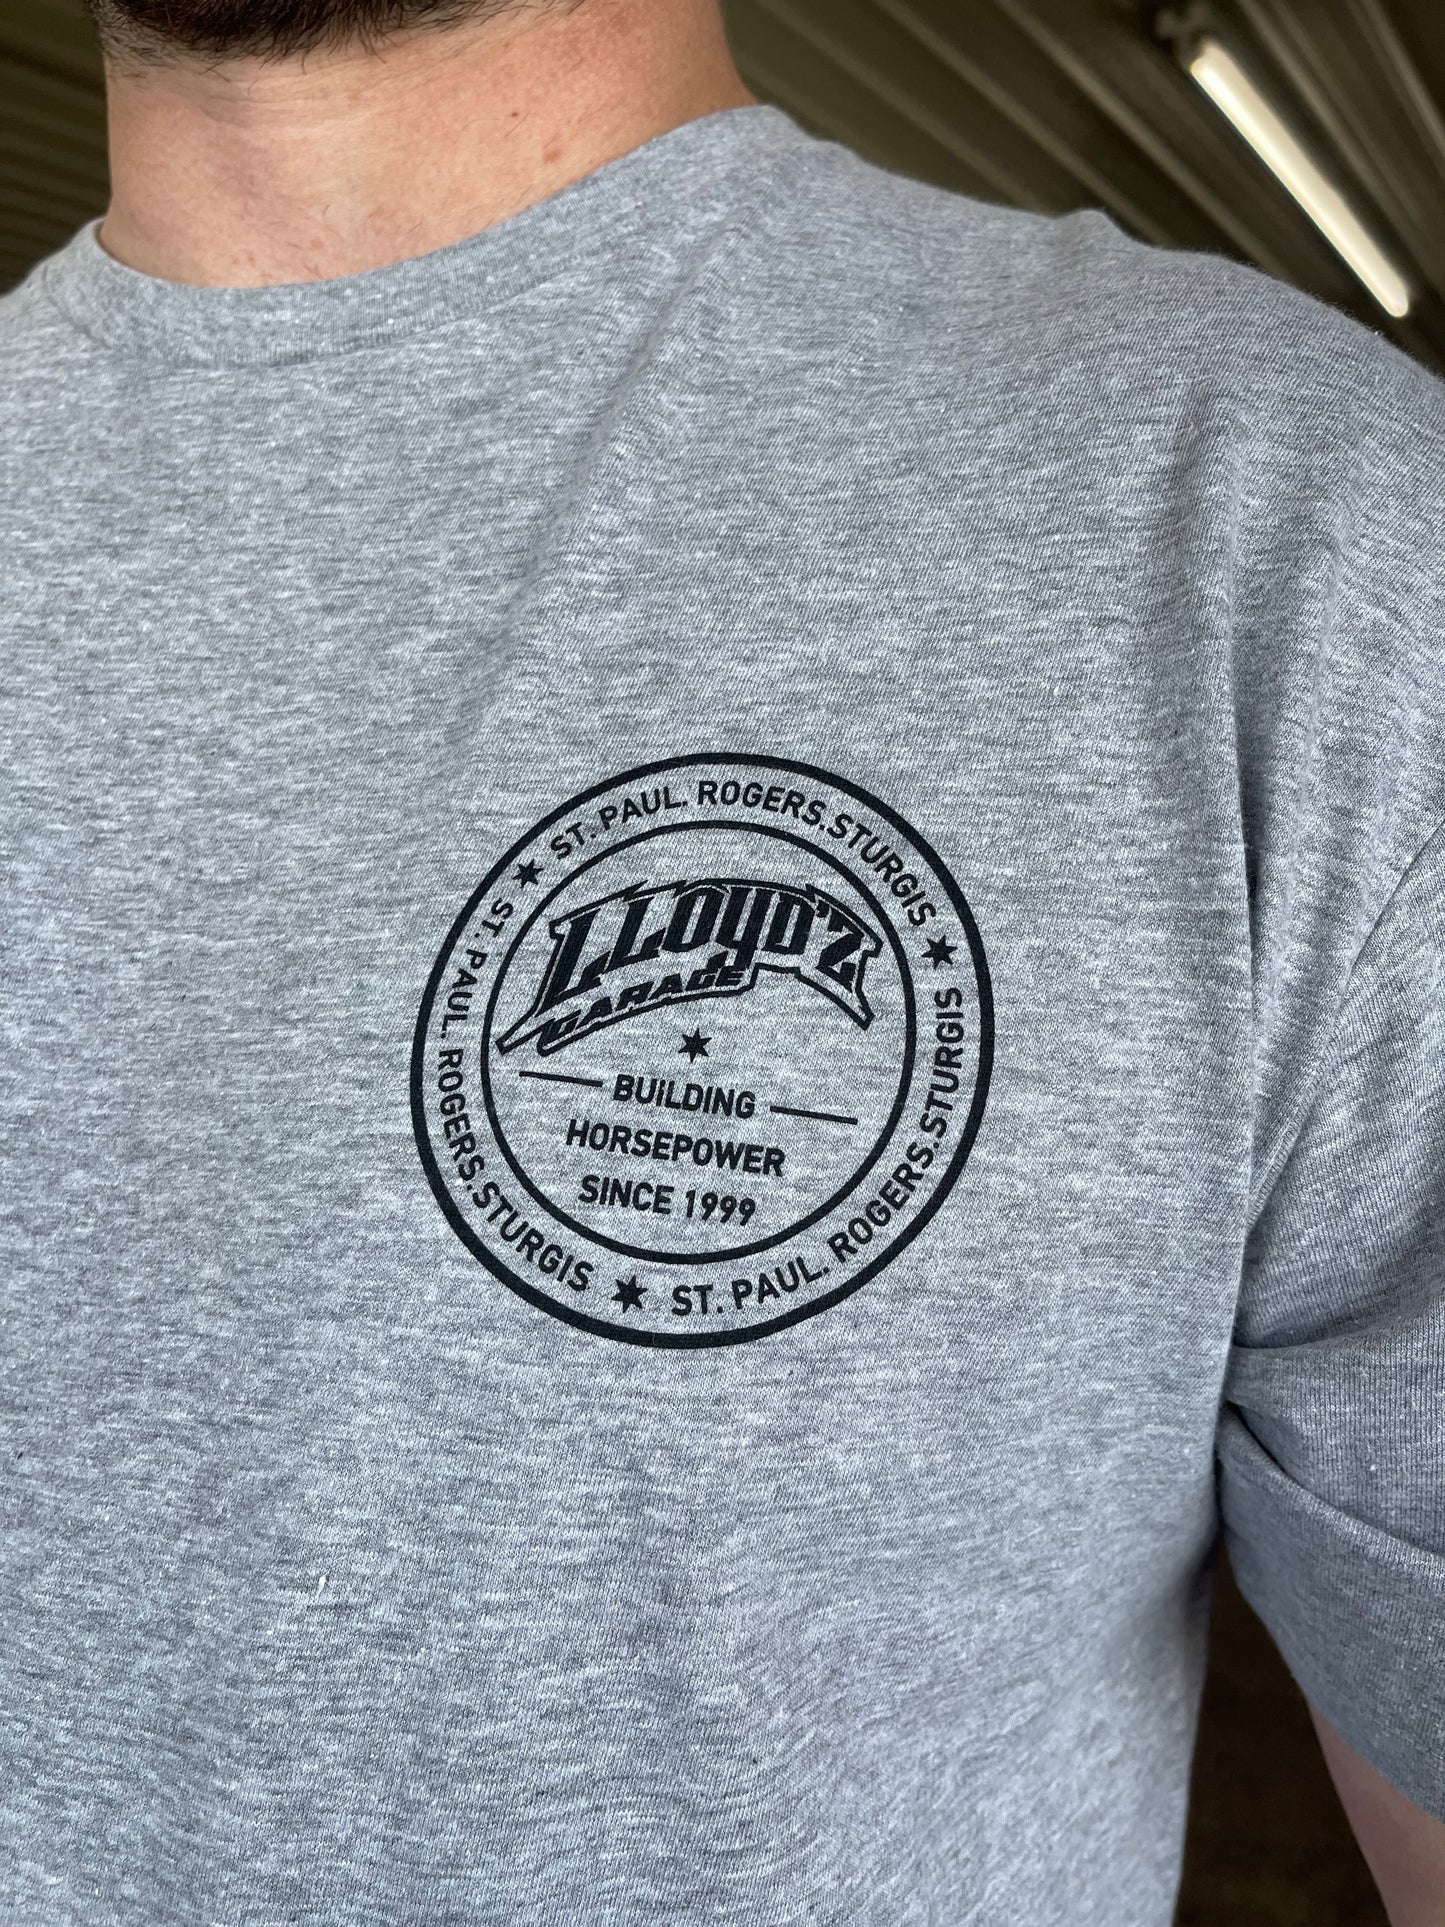 Lloyd'z Garage T-Shirt-New Design